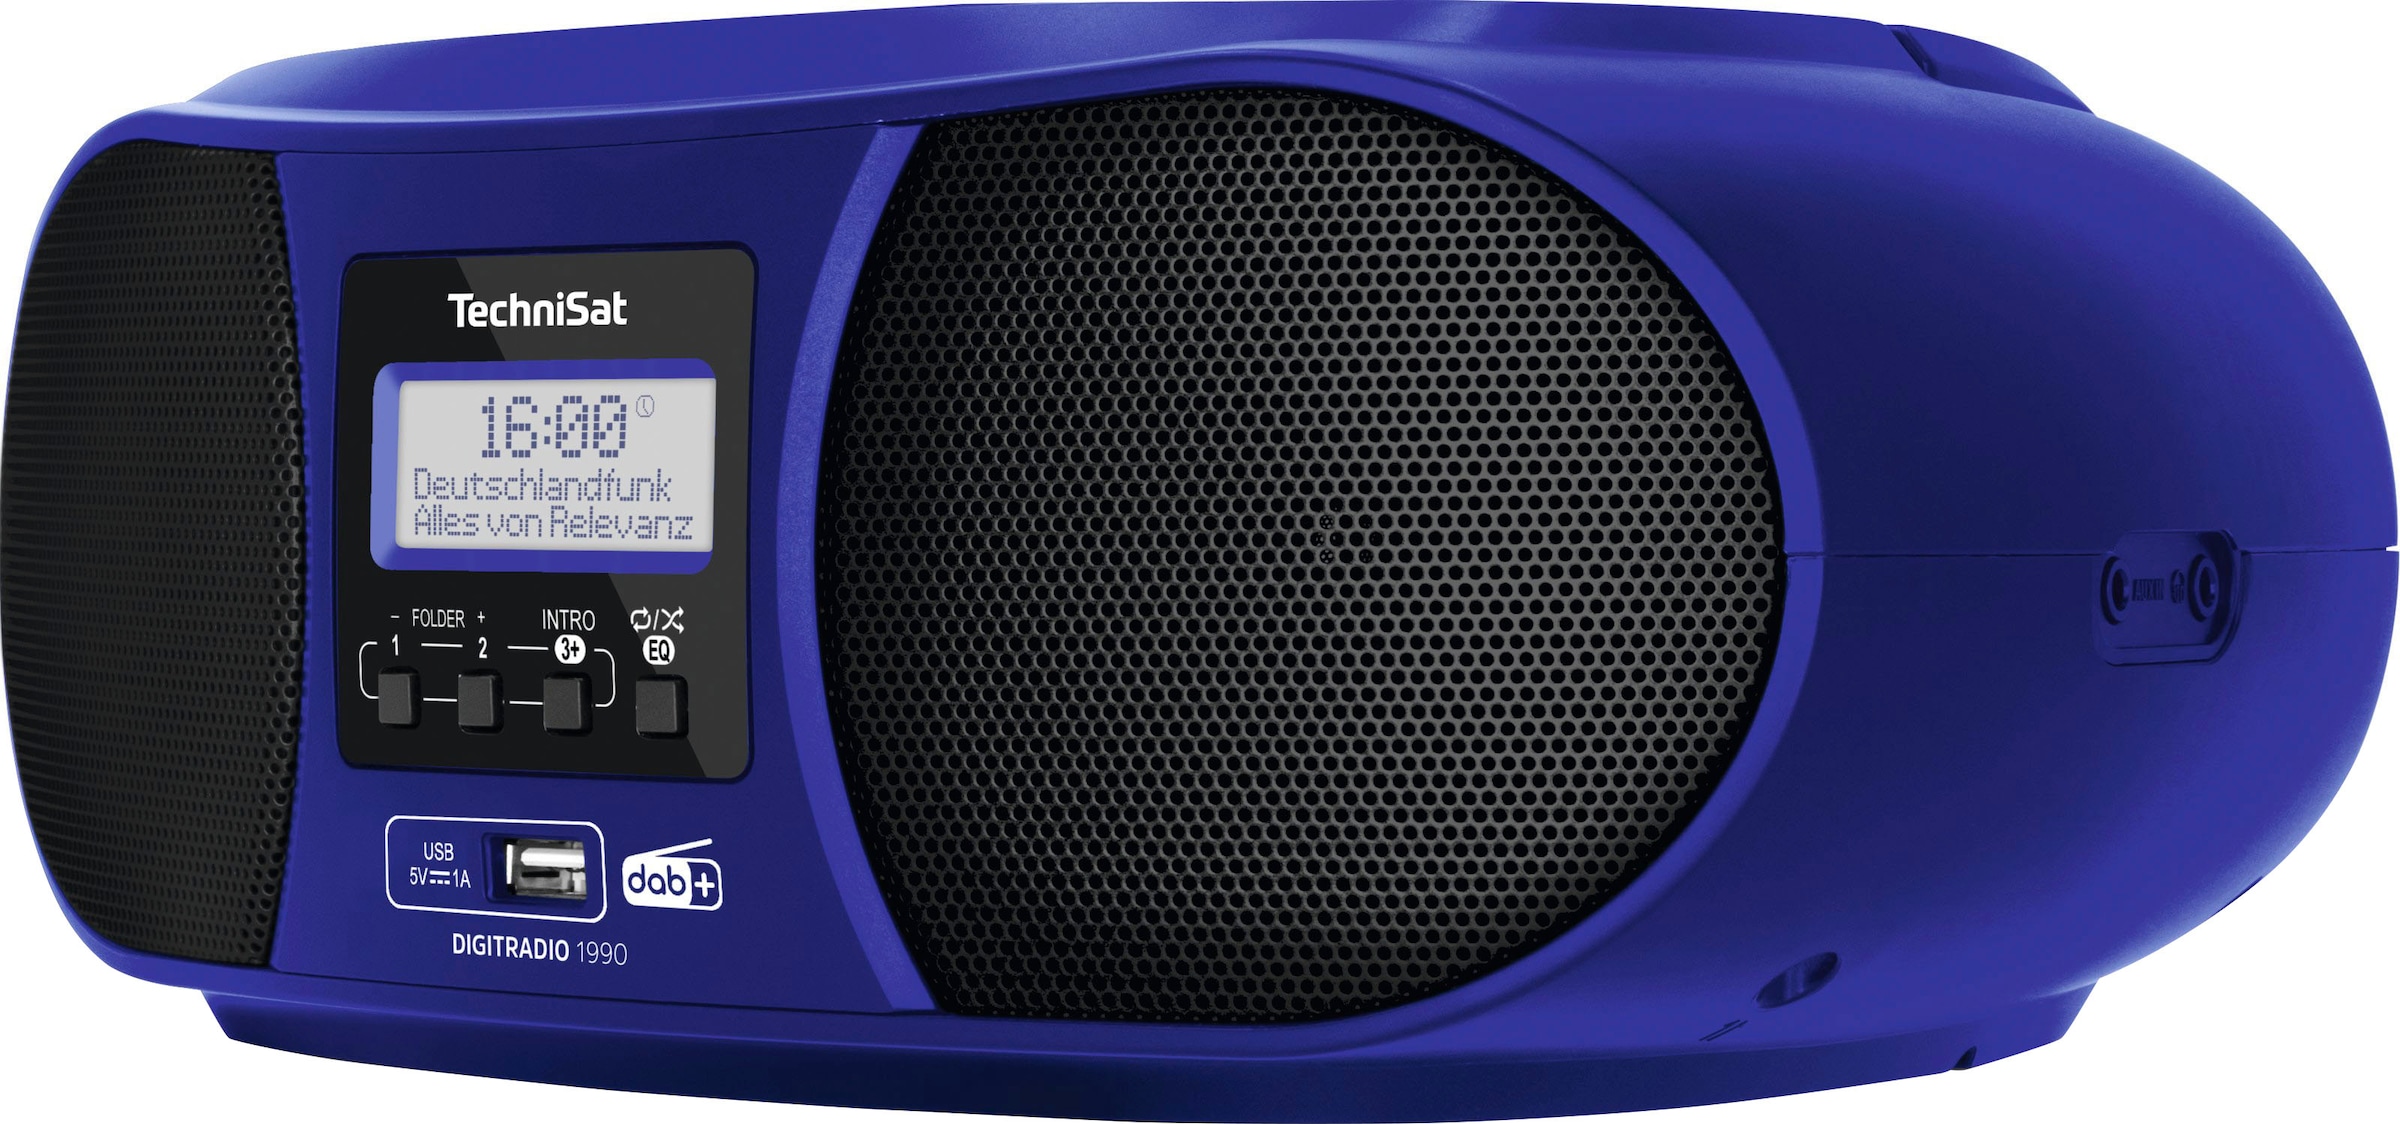 Digitalradio »DIGITRADIO mit jetzt (DAB+) ( W), (Bluetooth DAB+)-UKW bei TechniSat 1990«, 3 Digitalradio CD-Player RDS OTTO